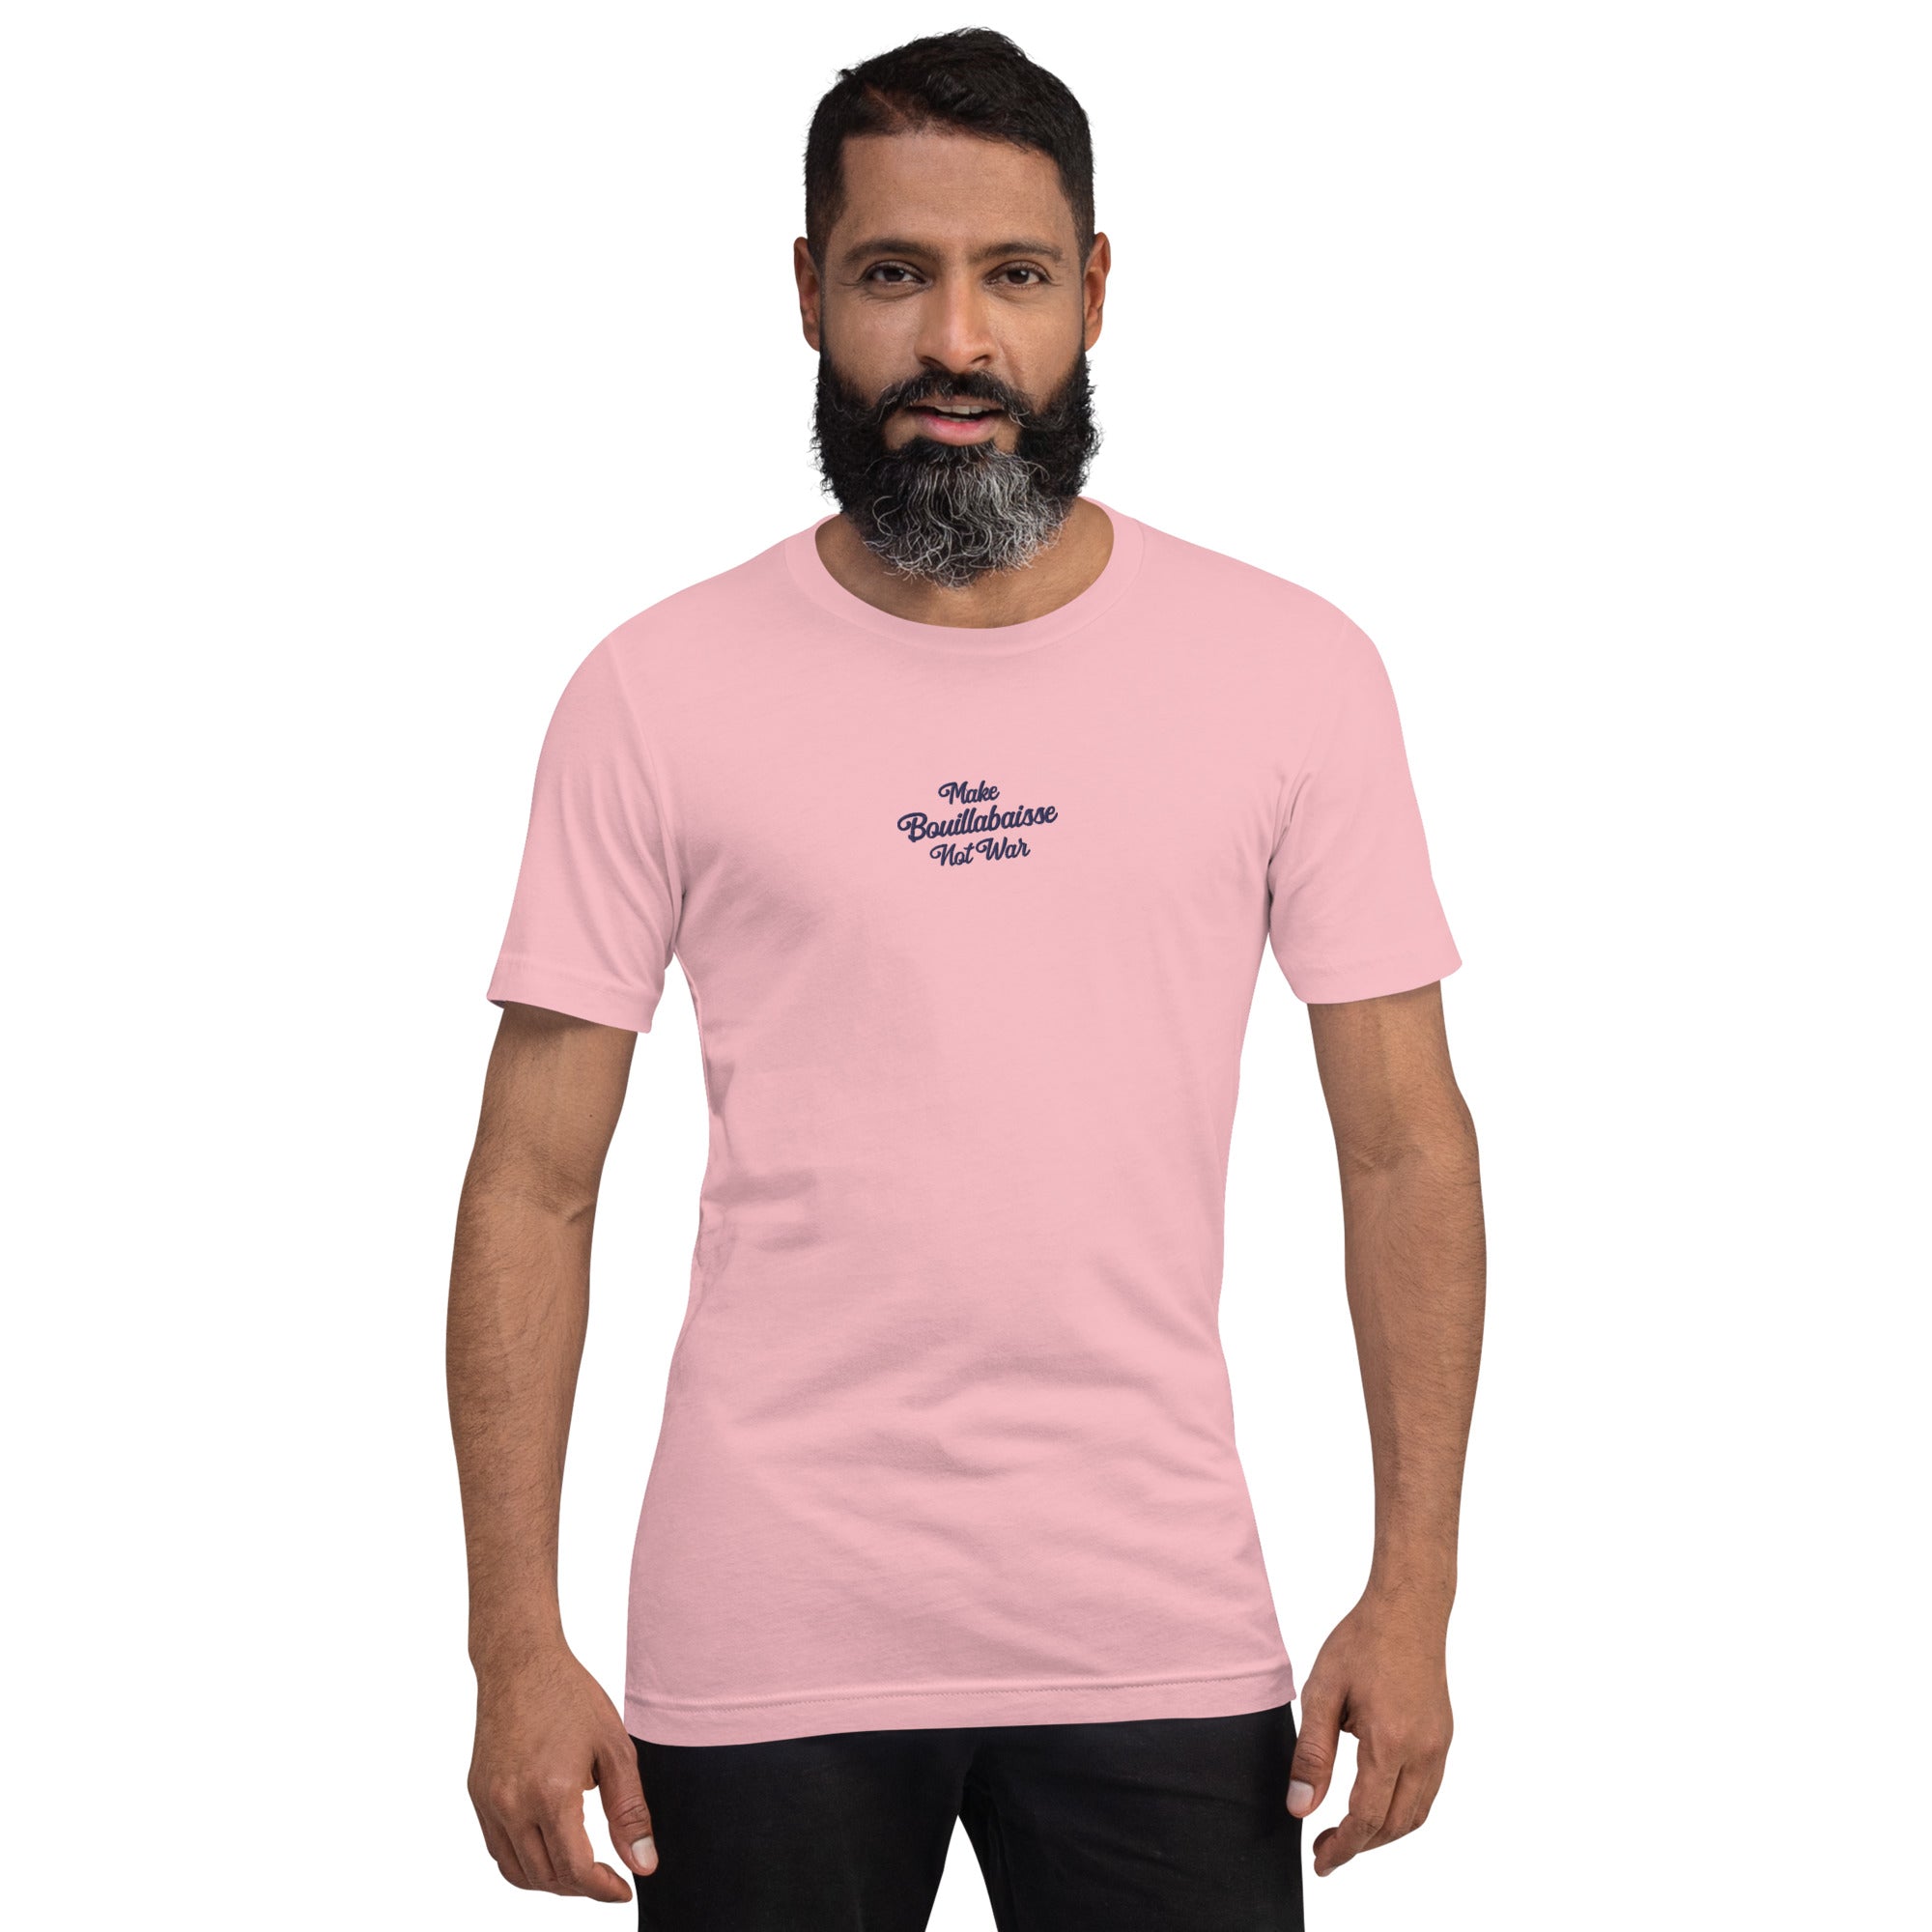 Unisex cotton t-shirt Make Bouillabaisse Not War Navy embroidered pattern on light colors